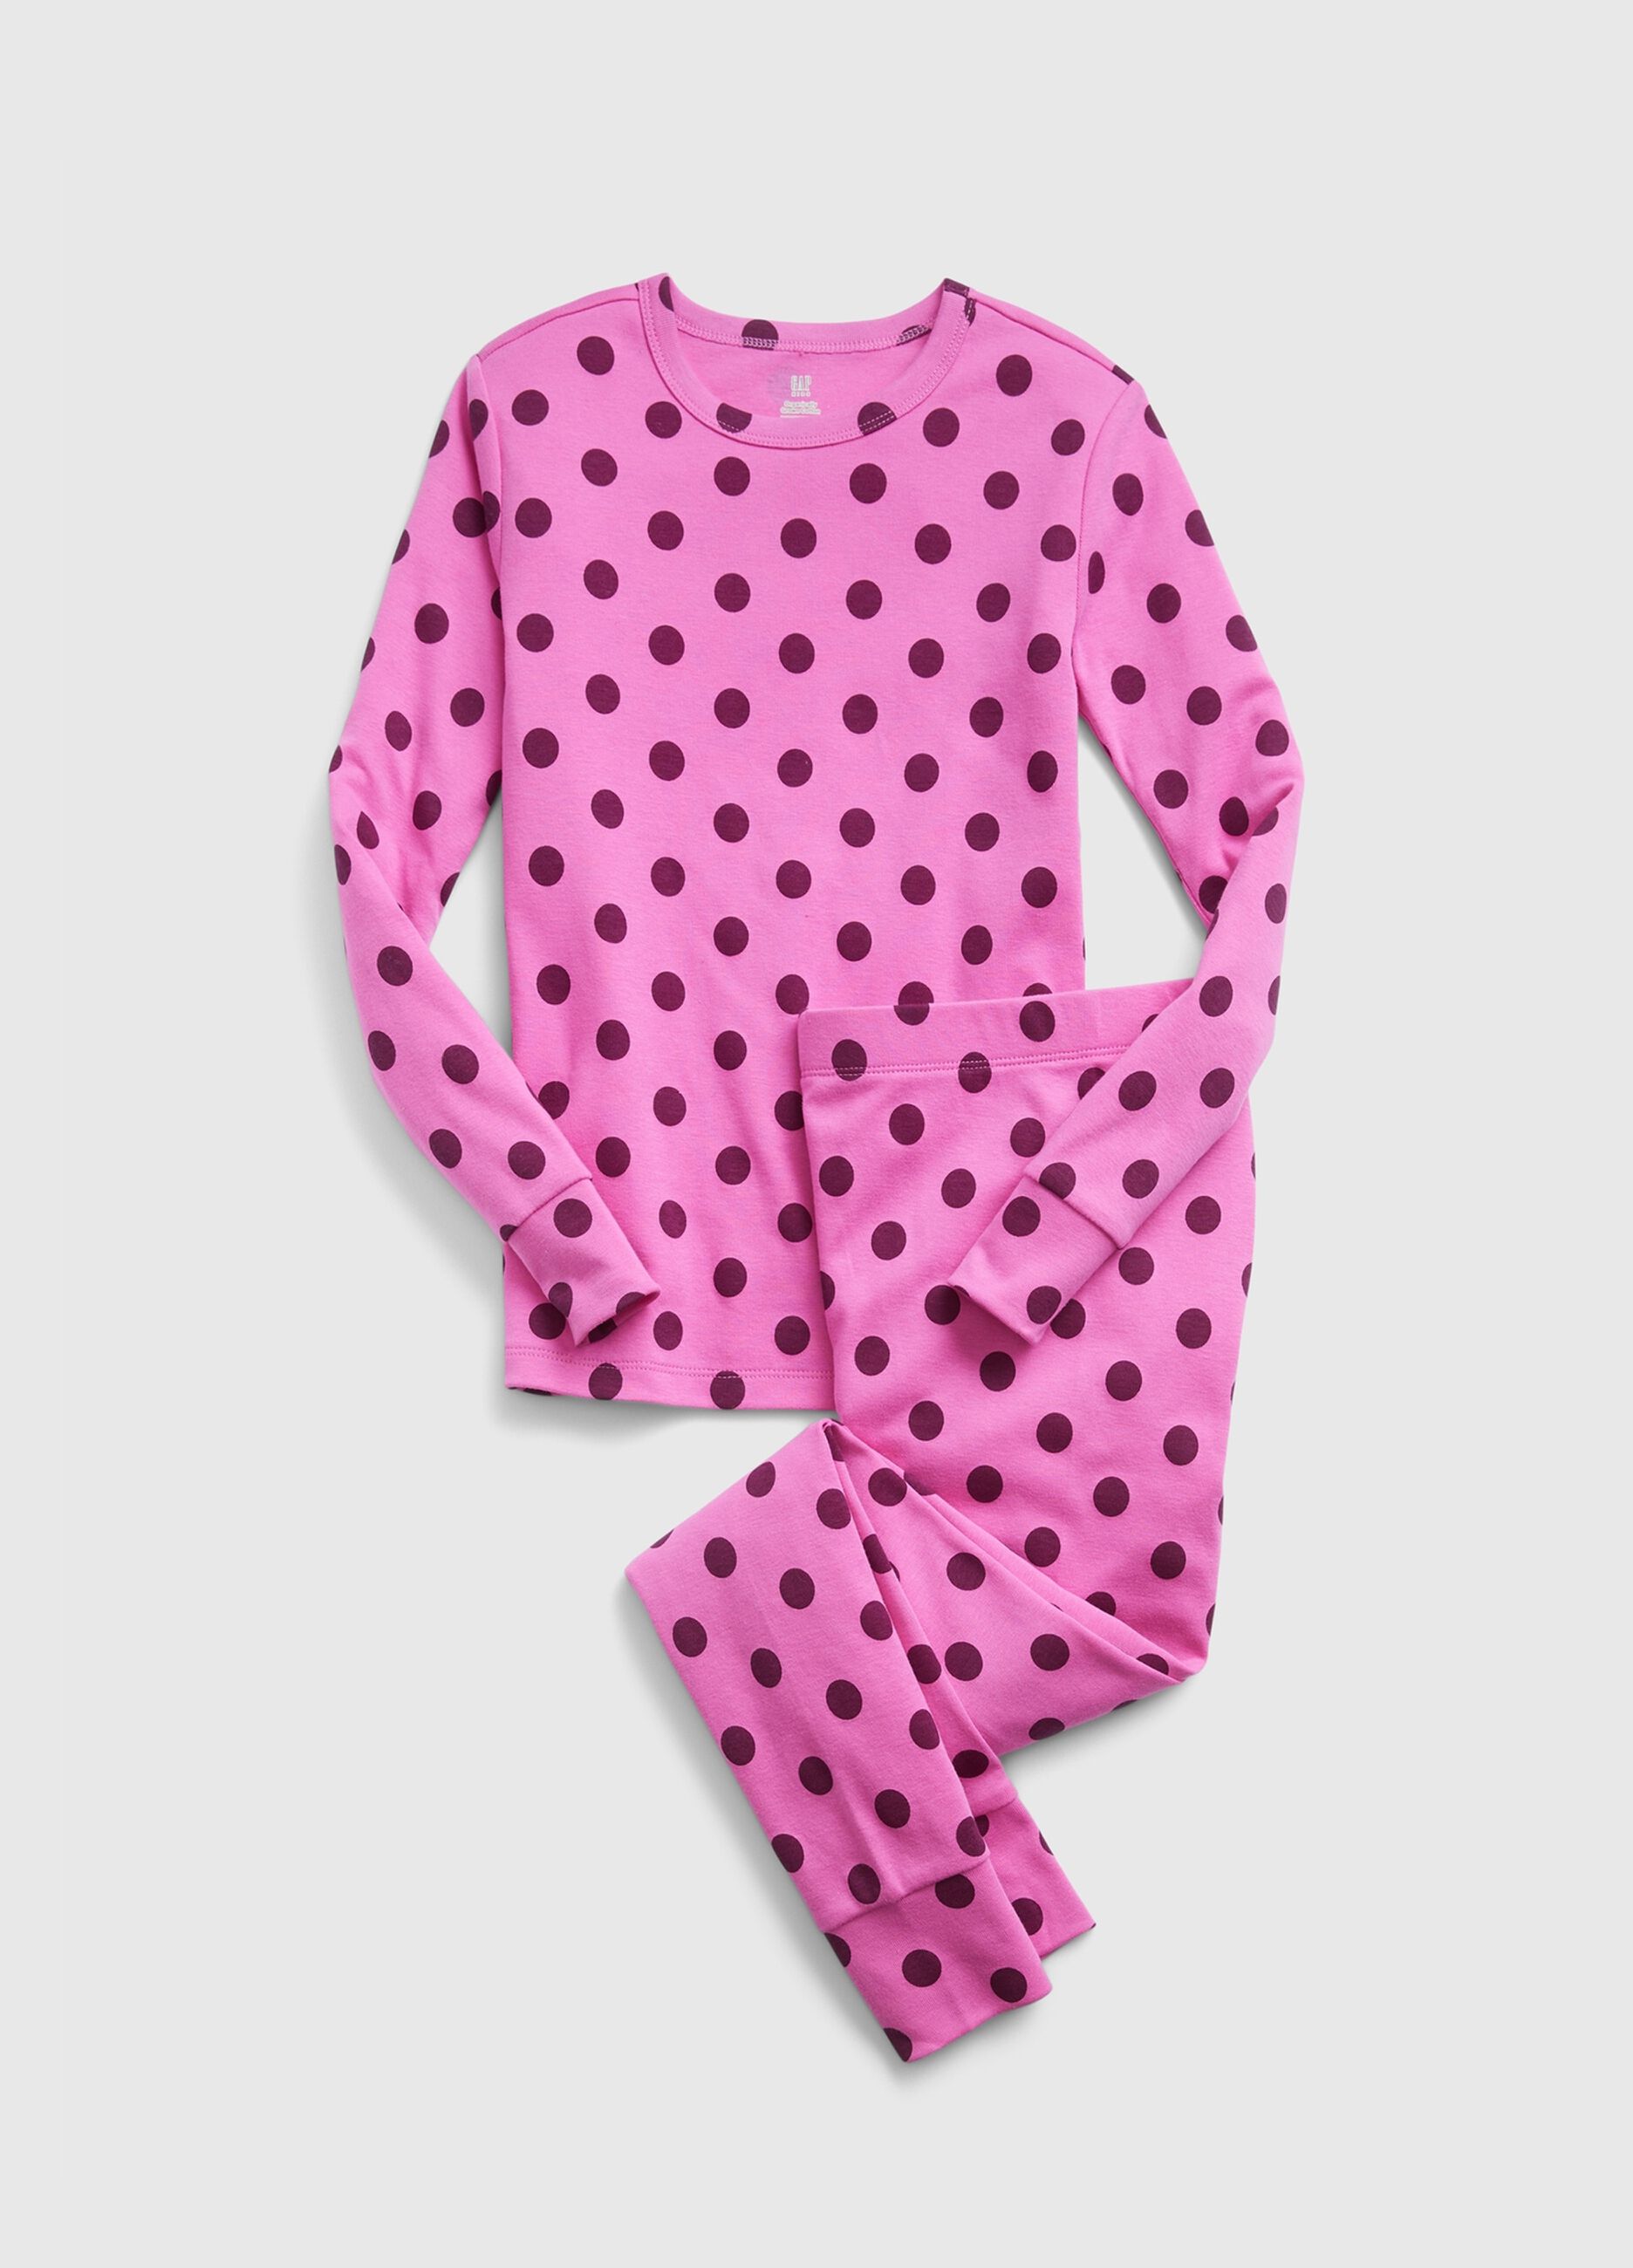 Full-length pyjamas with polka dot pattern